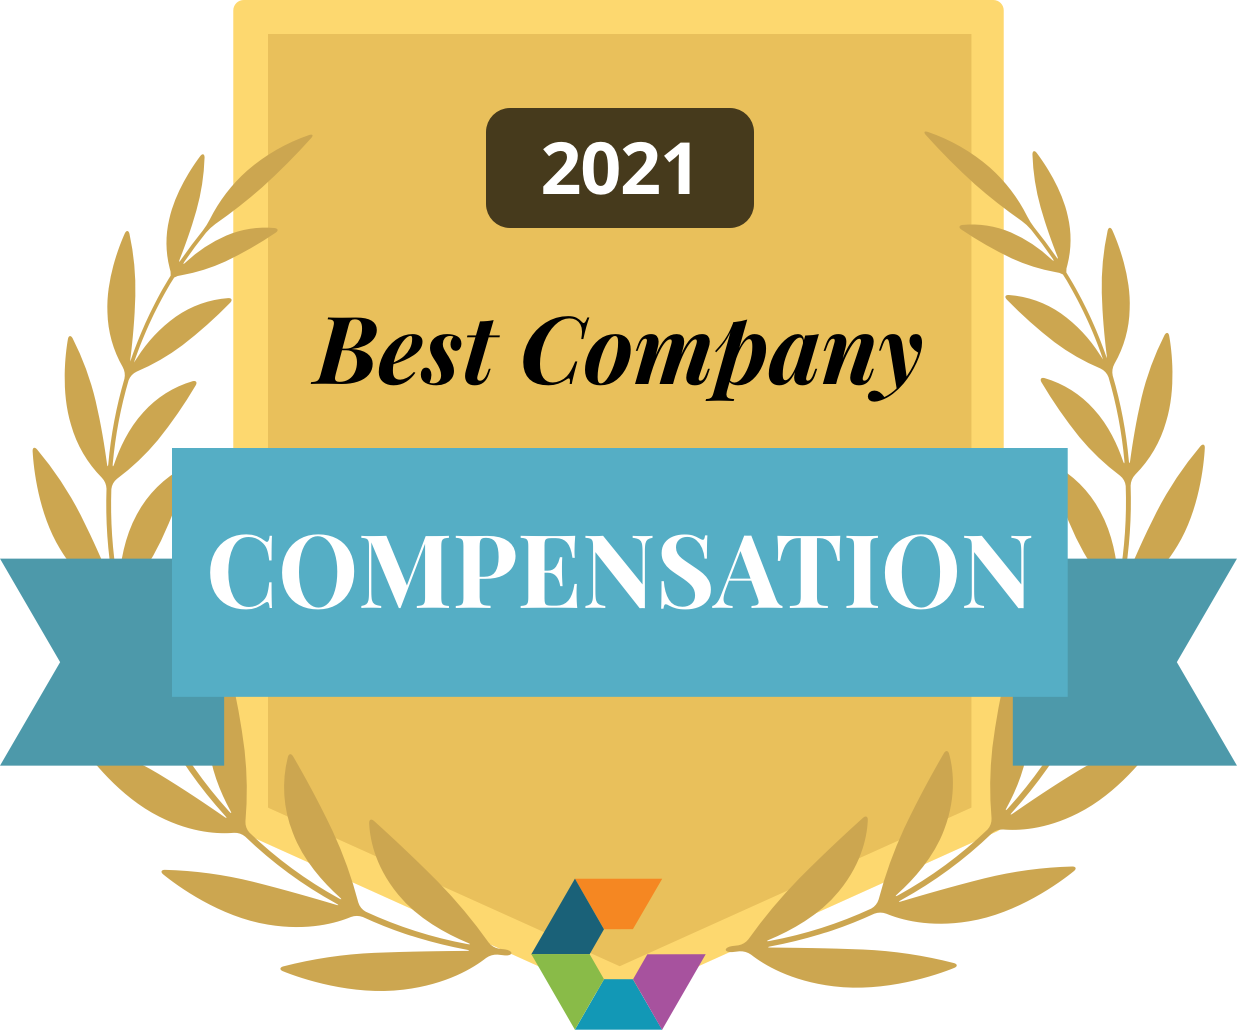 Best Company Compensation award